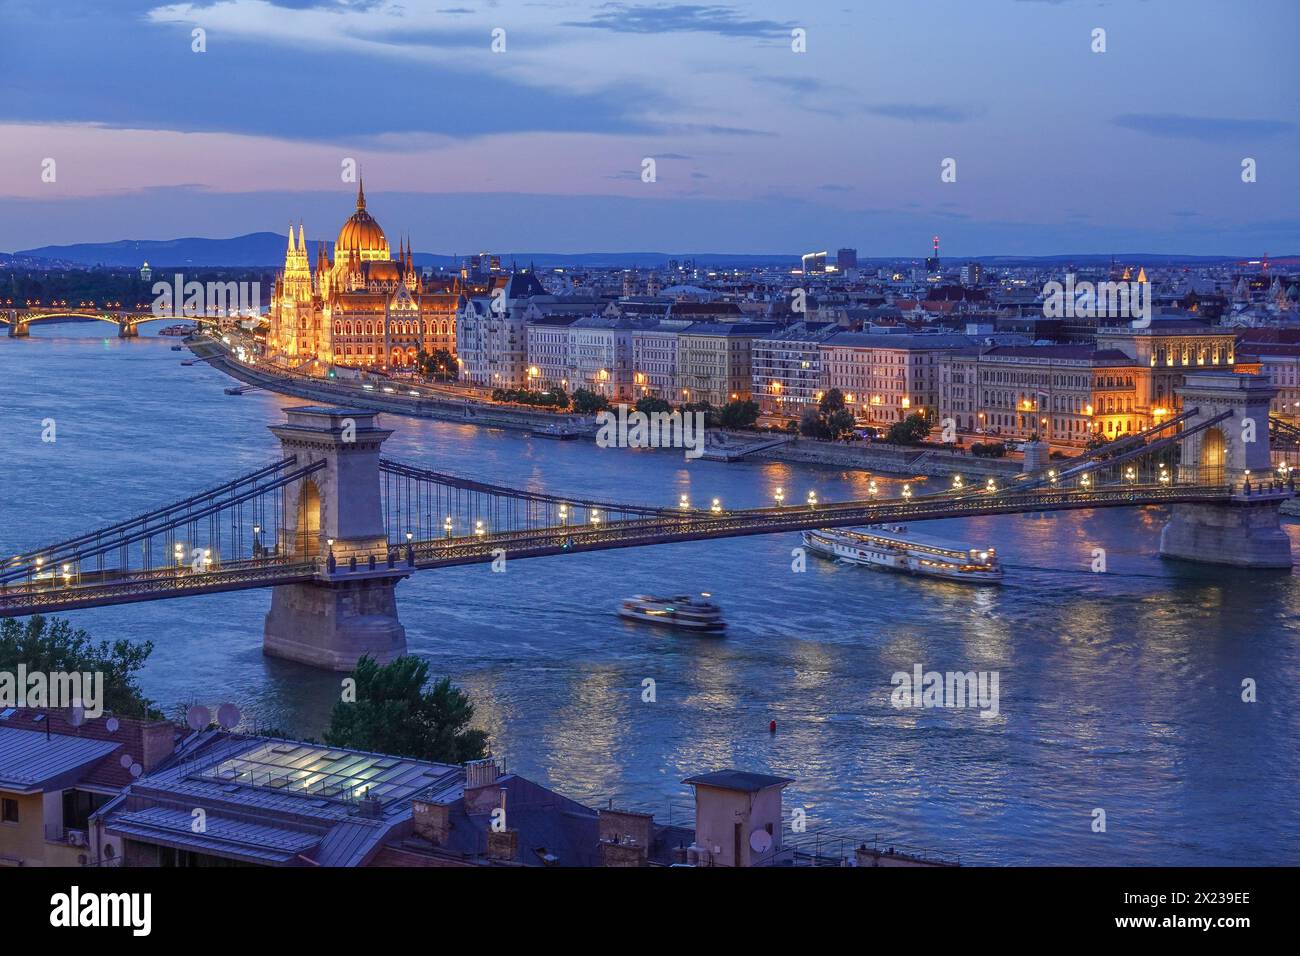 Hungary, Budapest, Aerial cityscape image of Budapest with the illuminated Szechenyi Chain Bridge and parliament building. Designed by English enginee Stock Photo